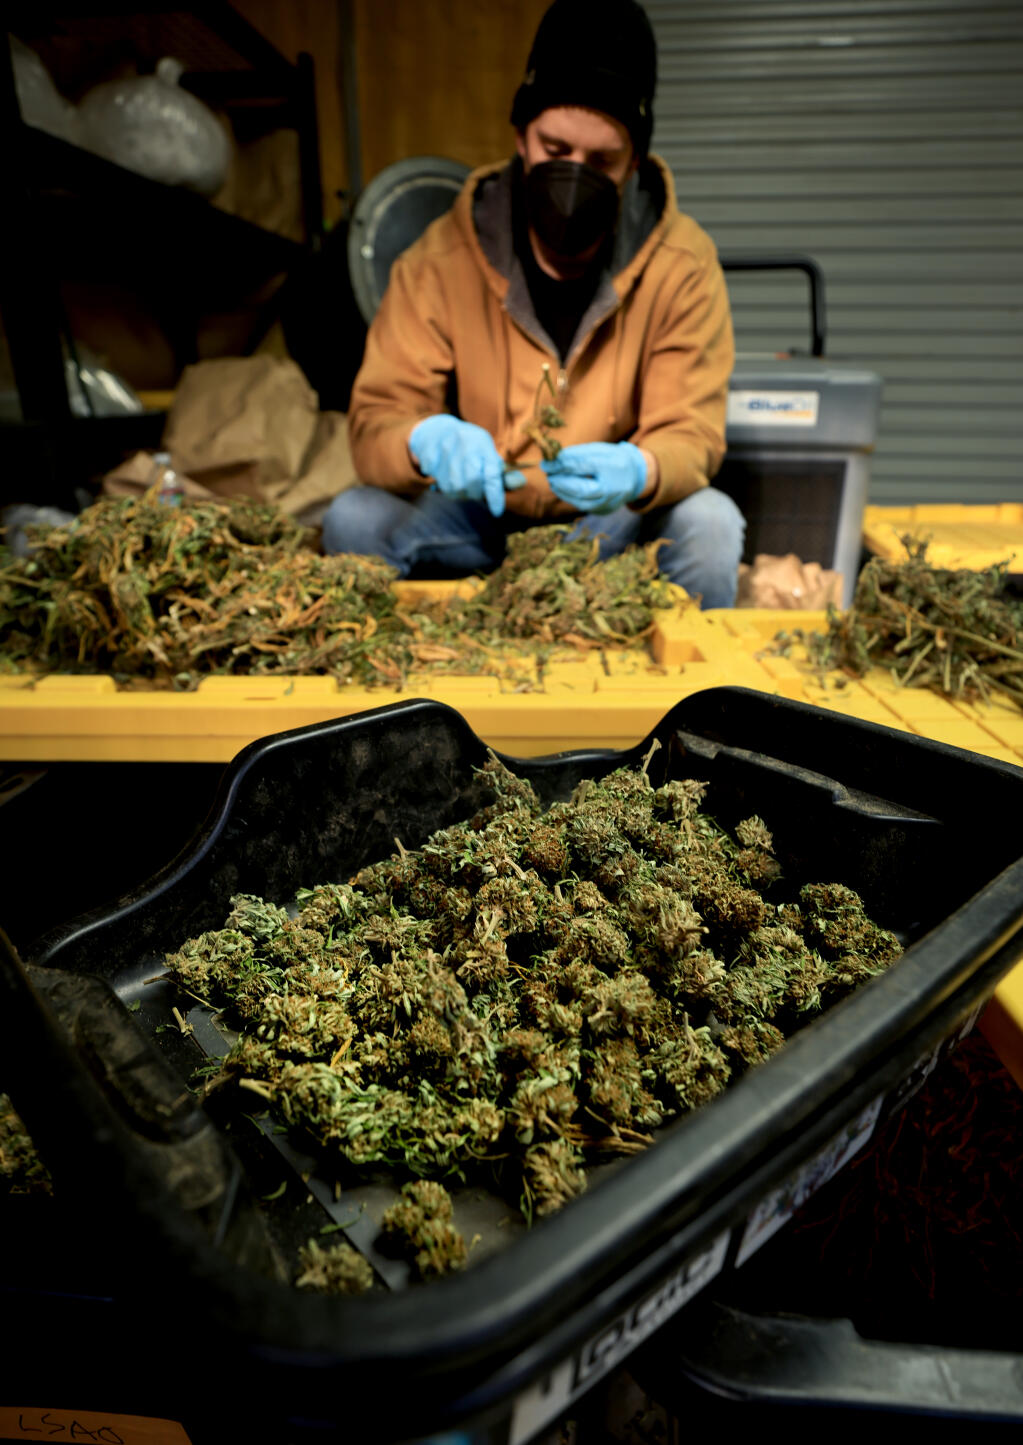 Ryan Derum sorts harvested cannabis at his family's marijuana grow, Tuesday, Jan. 18, 2022 near Lower Lake. (Kent Porter / The Press Democrat) 2022